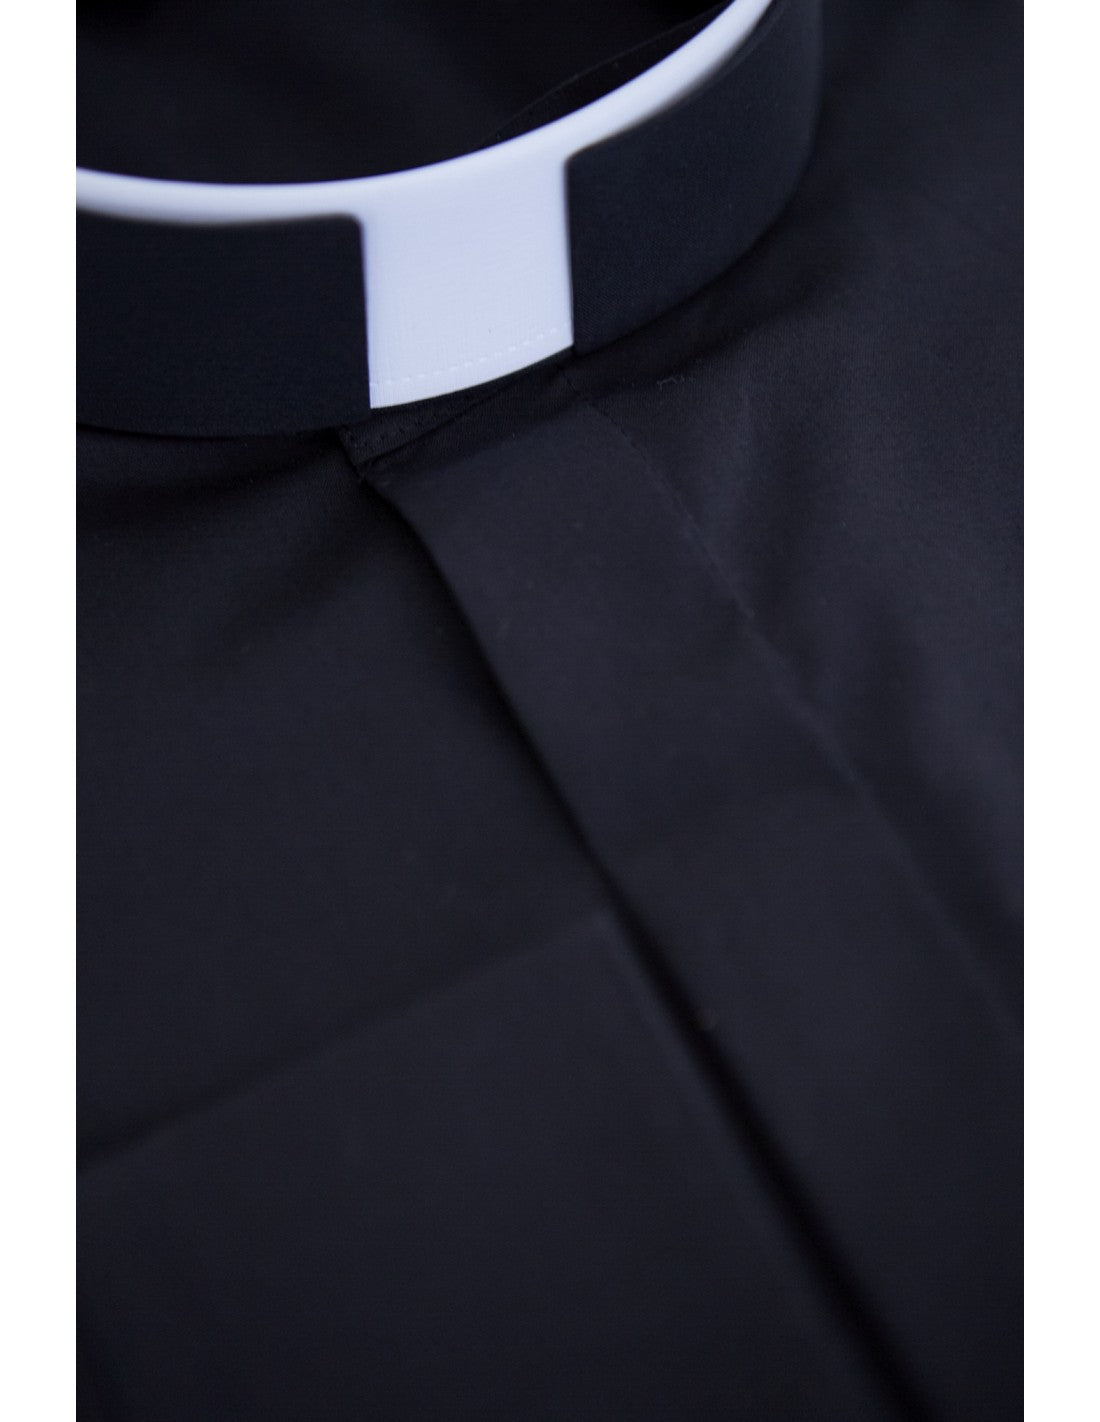 BLACK ROMAN COLLAR CLERGY SHIRT - POLY/COTTON - SHORT SLEEVES | Barbiconi